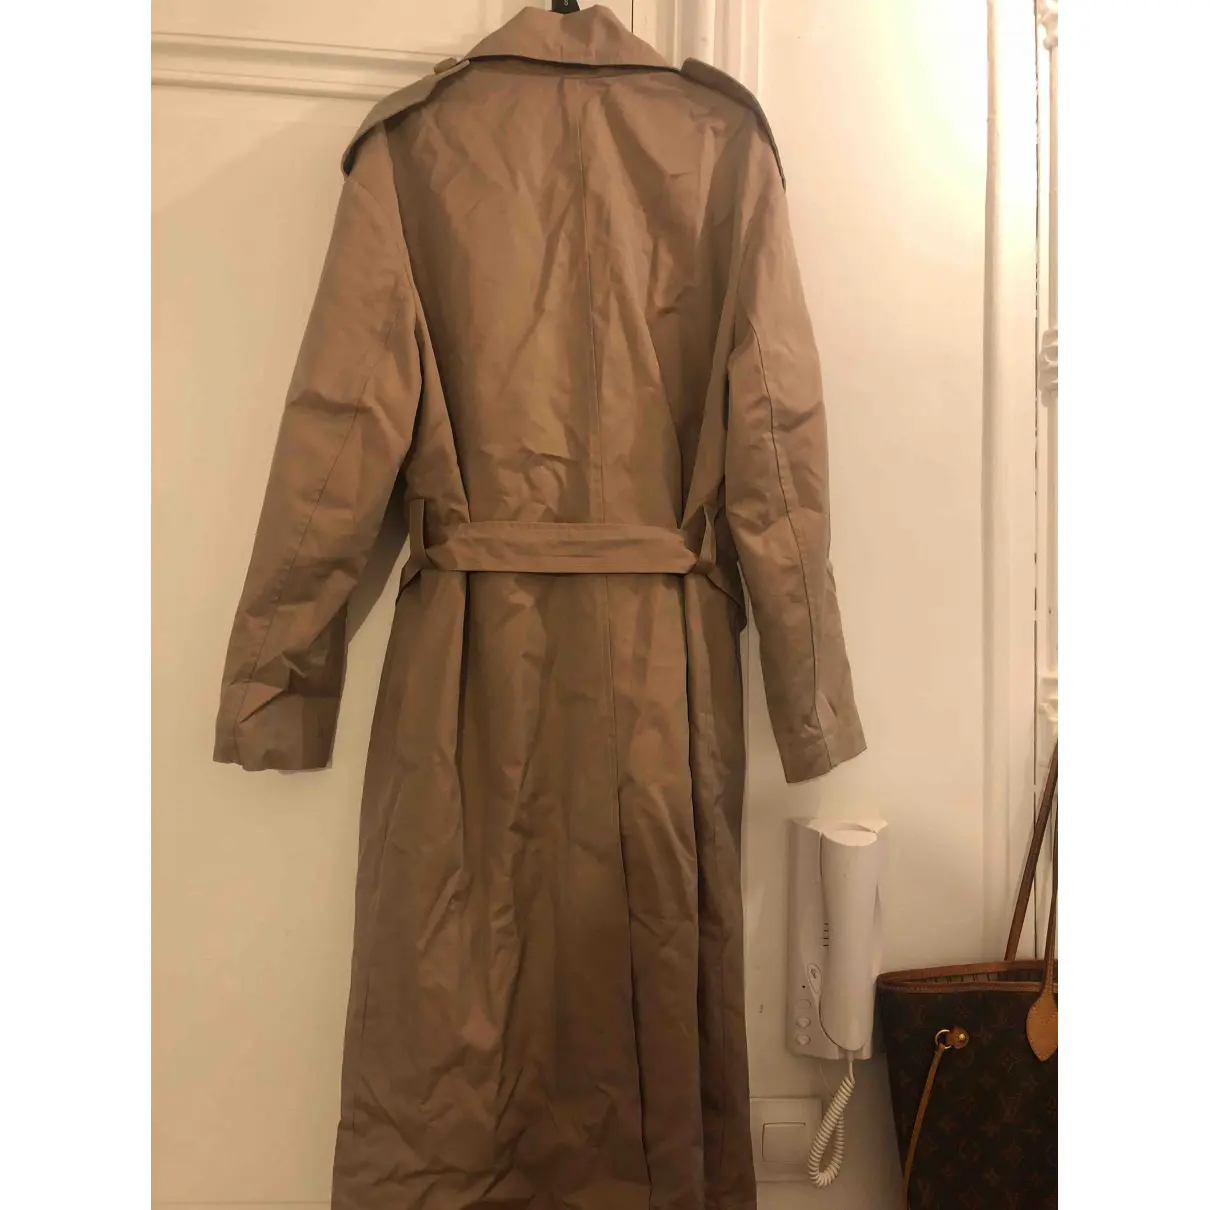 Buy Maje Trench coat online